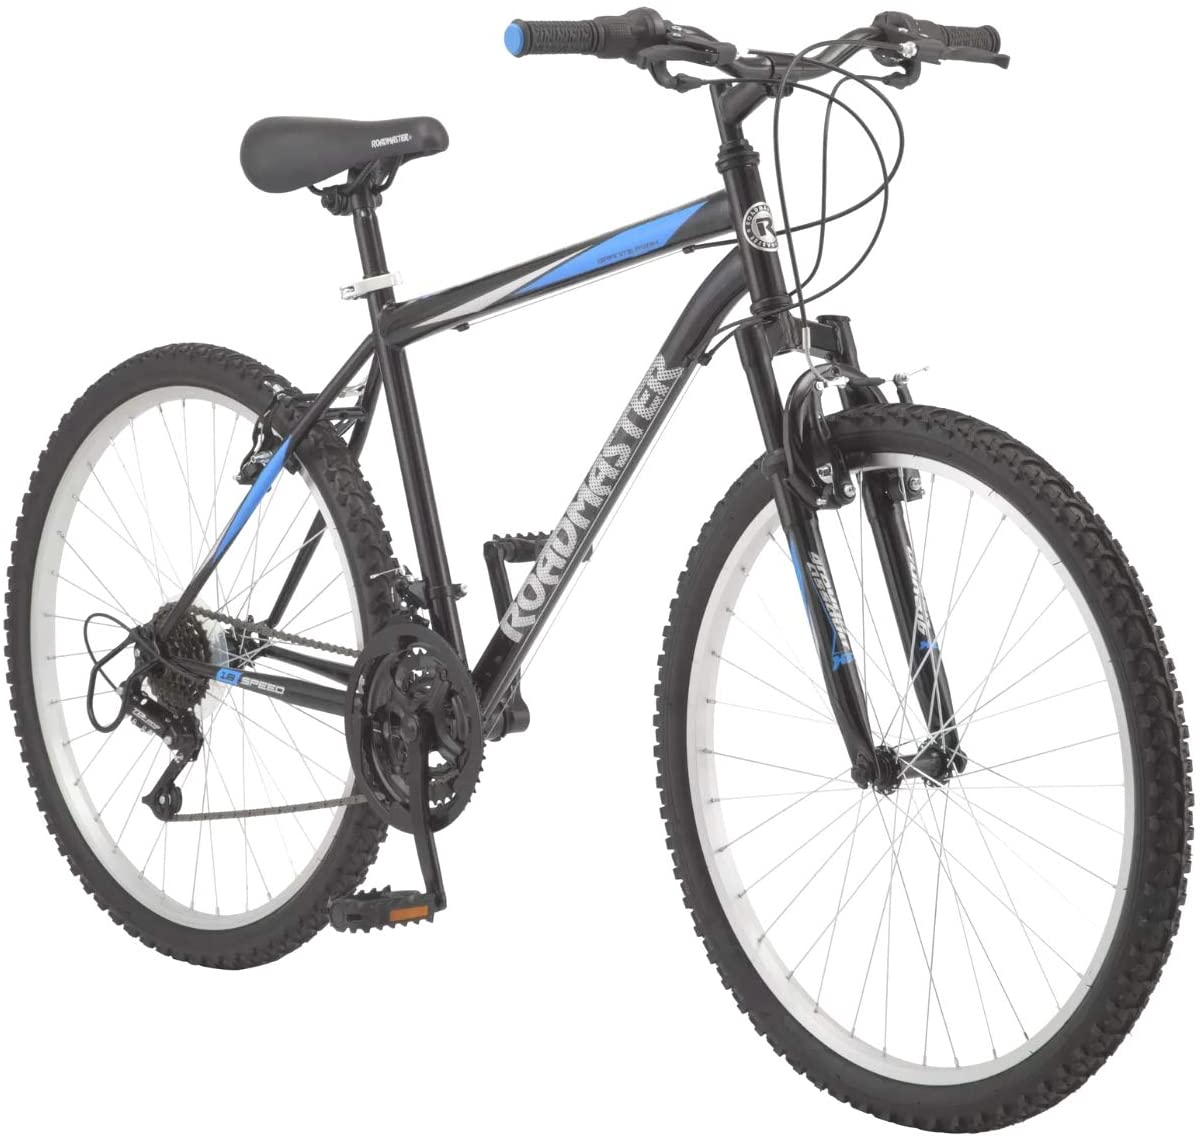 Review of Roadmaster - 26 Inches Granite Peak Men's Mountain Bike, Black/Blue